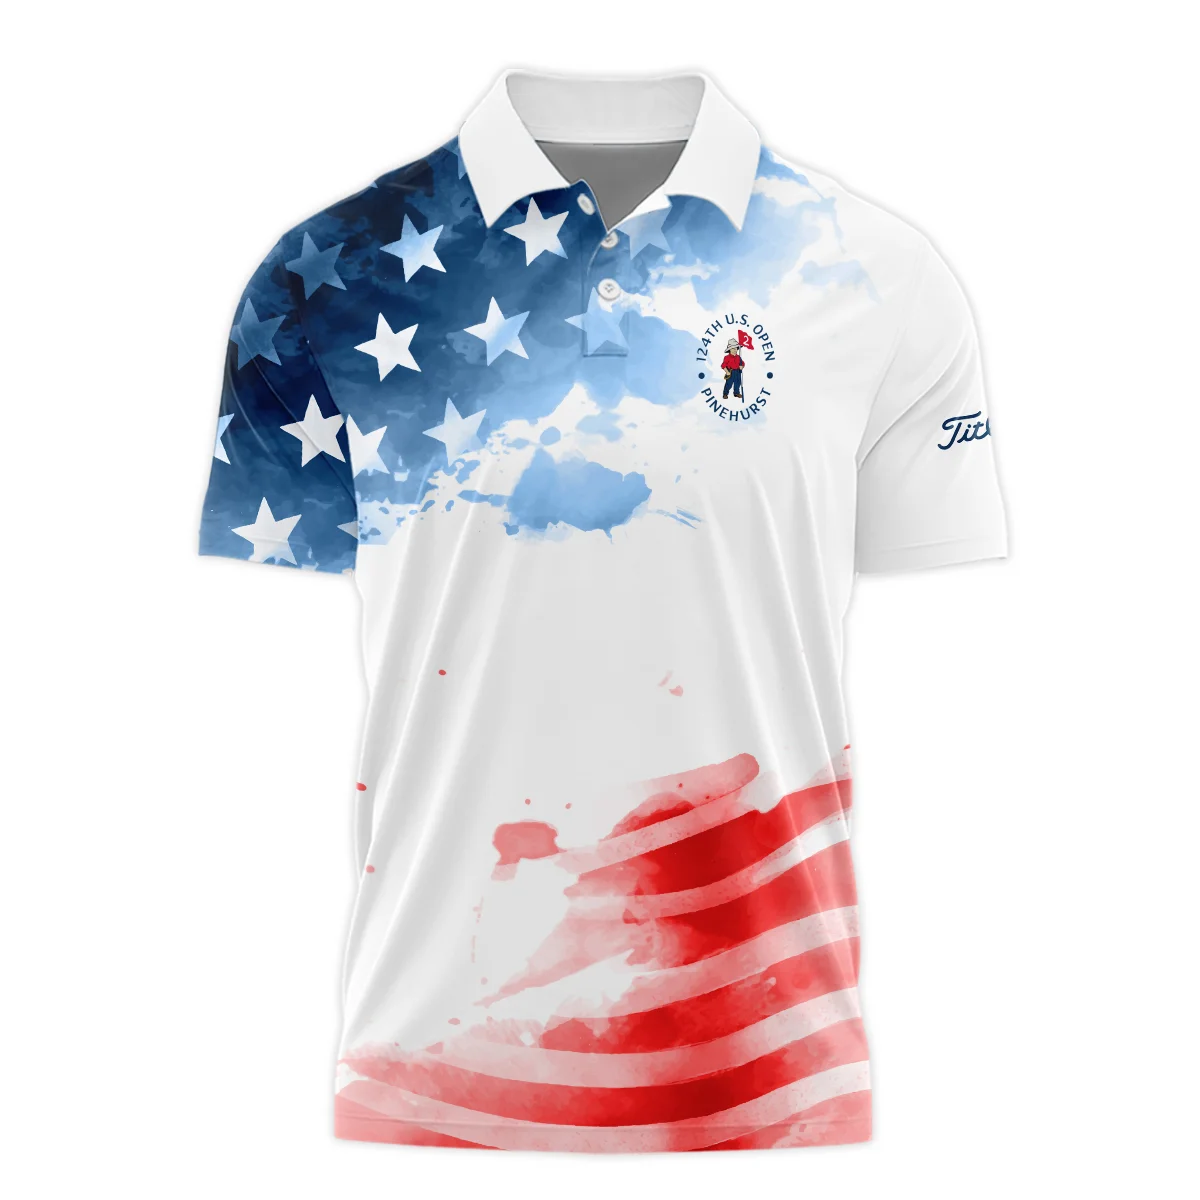 Golf 124th U.S. Open Pinehurst Titleist Hoodie Shirt US Flag Watercolor Golf Sports All Over Print Hoodie Shirt